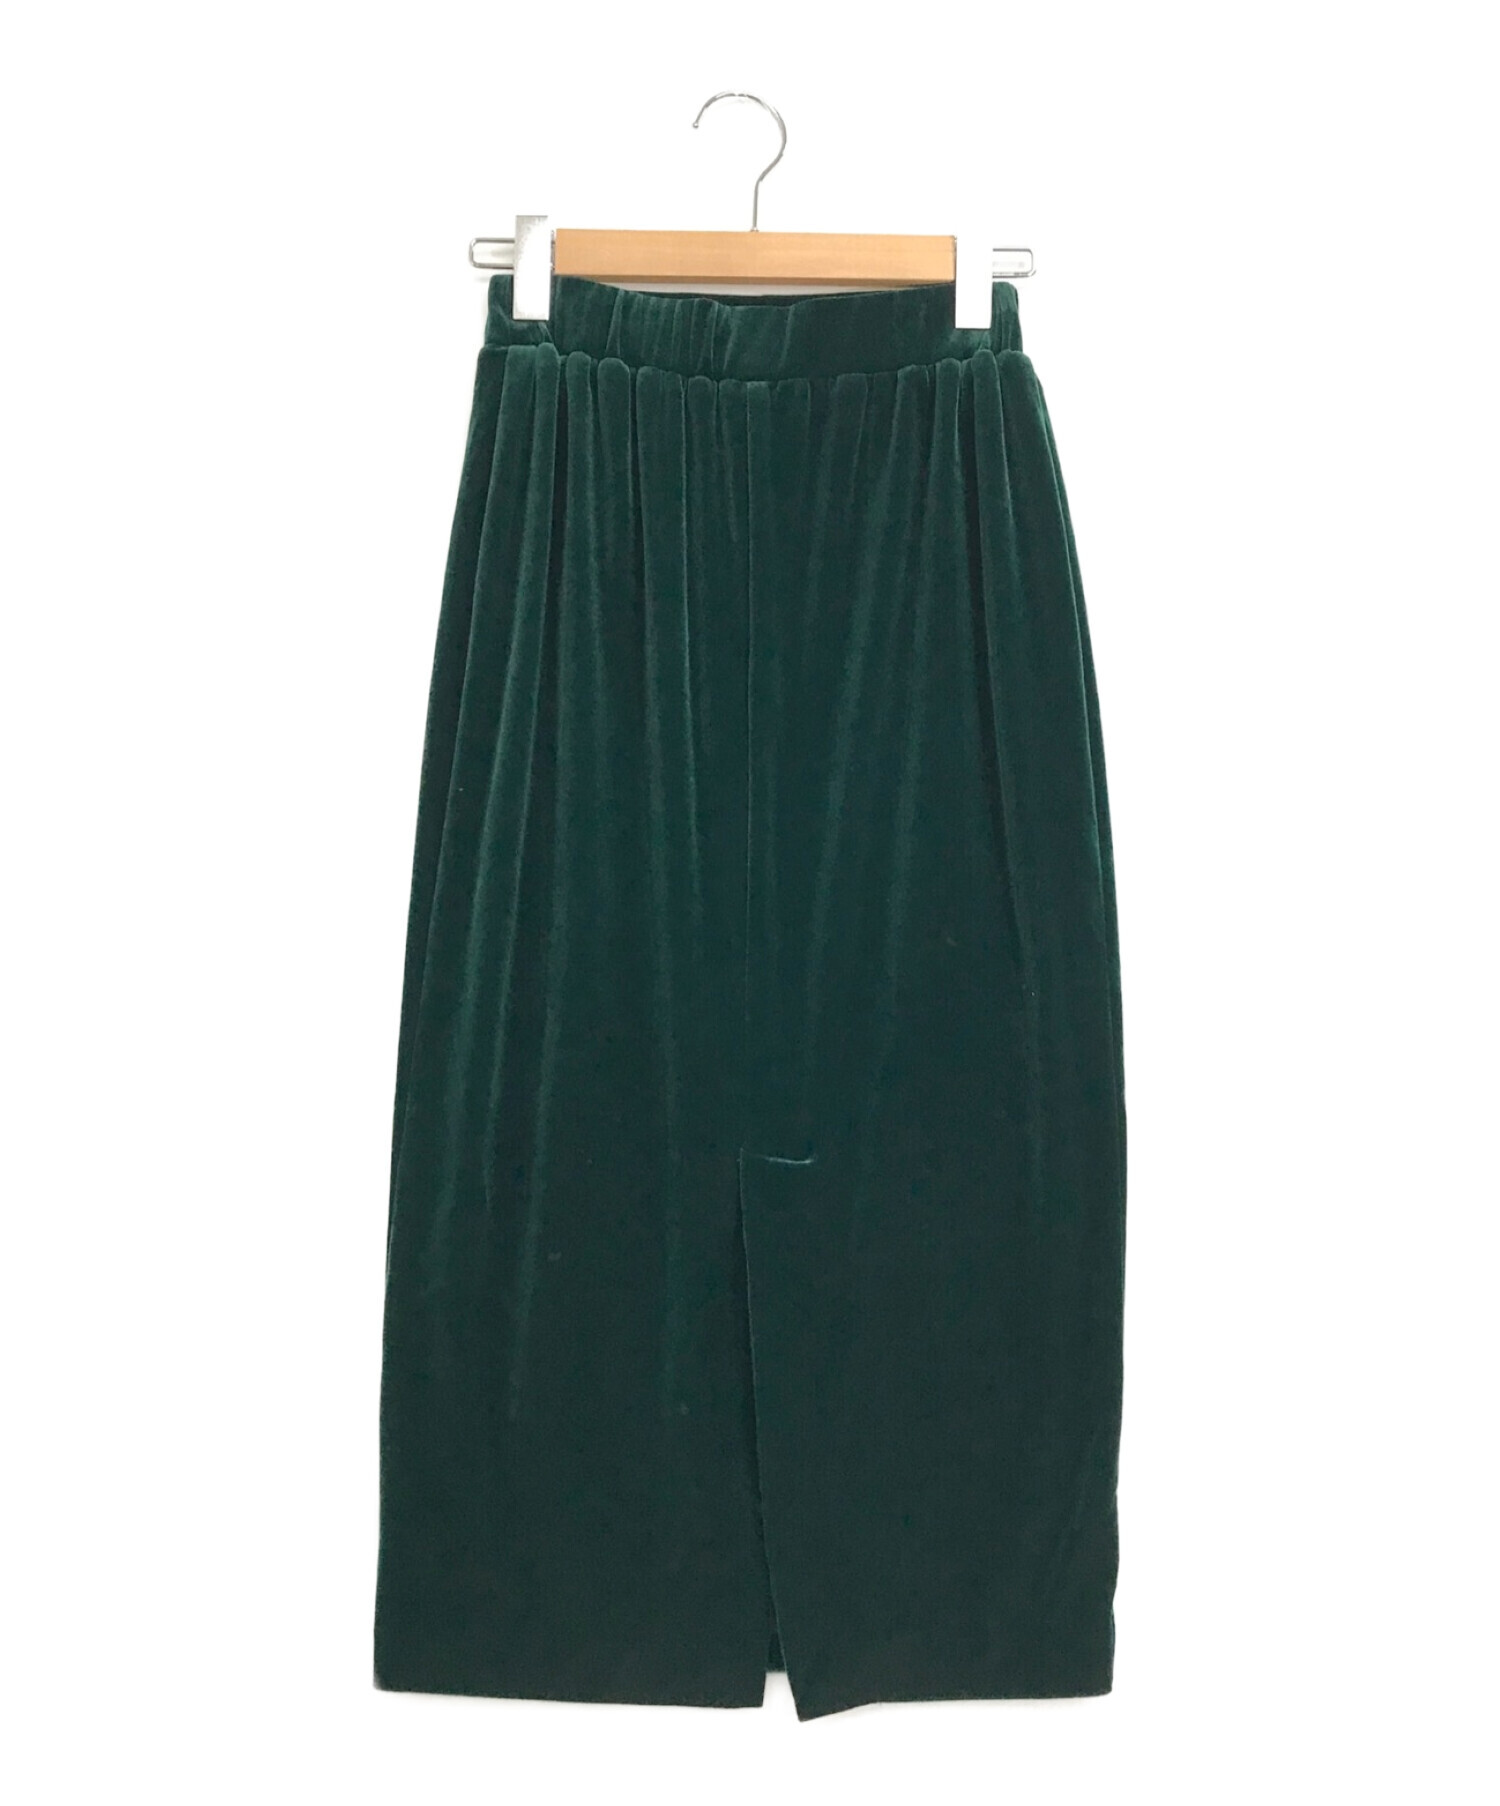 MUSE de Deuxieme Classe (ミューズ ドゥーズィエム クラス) ベロアタイトスカート グリーン サイズ:34